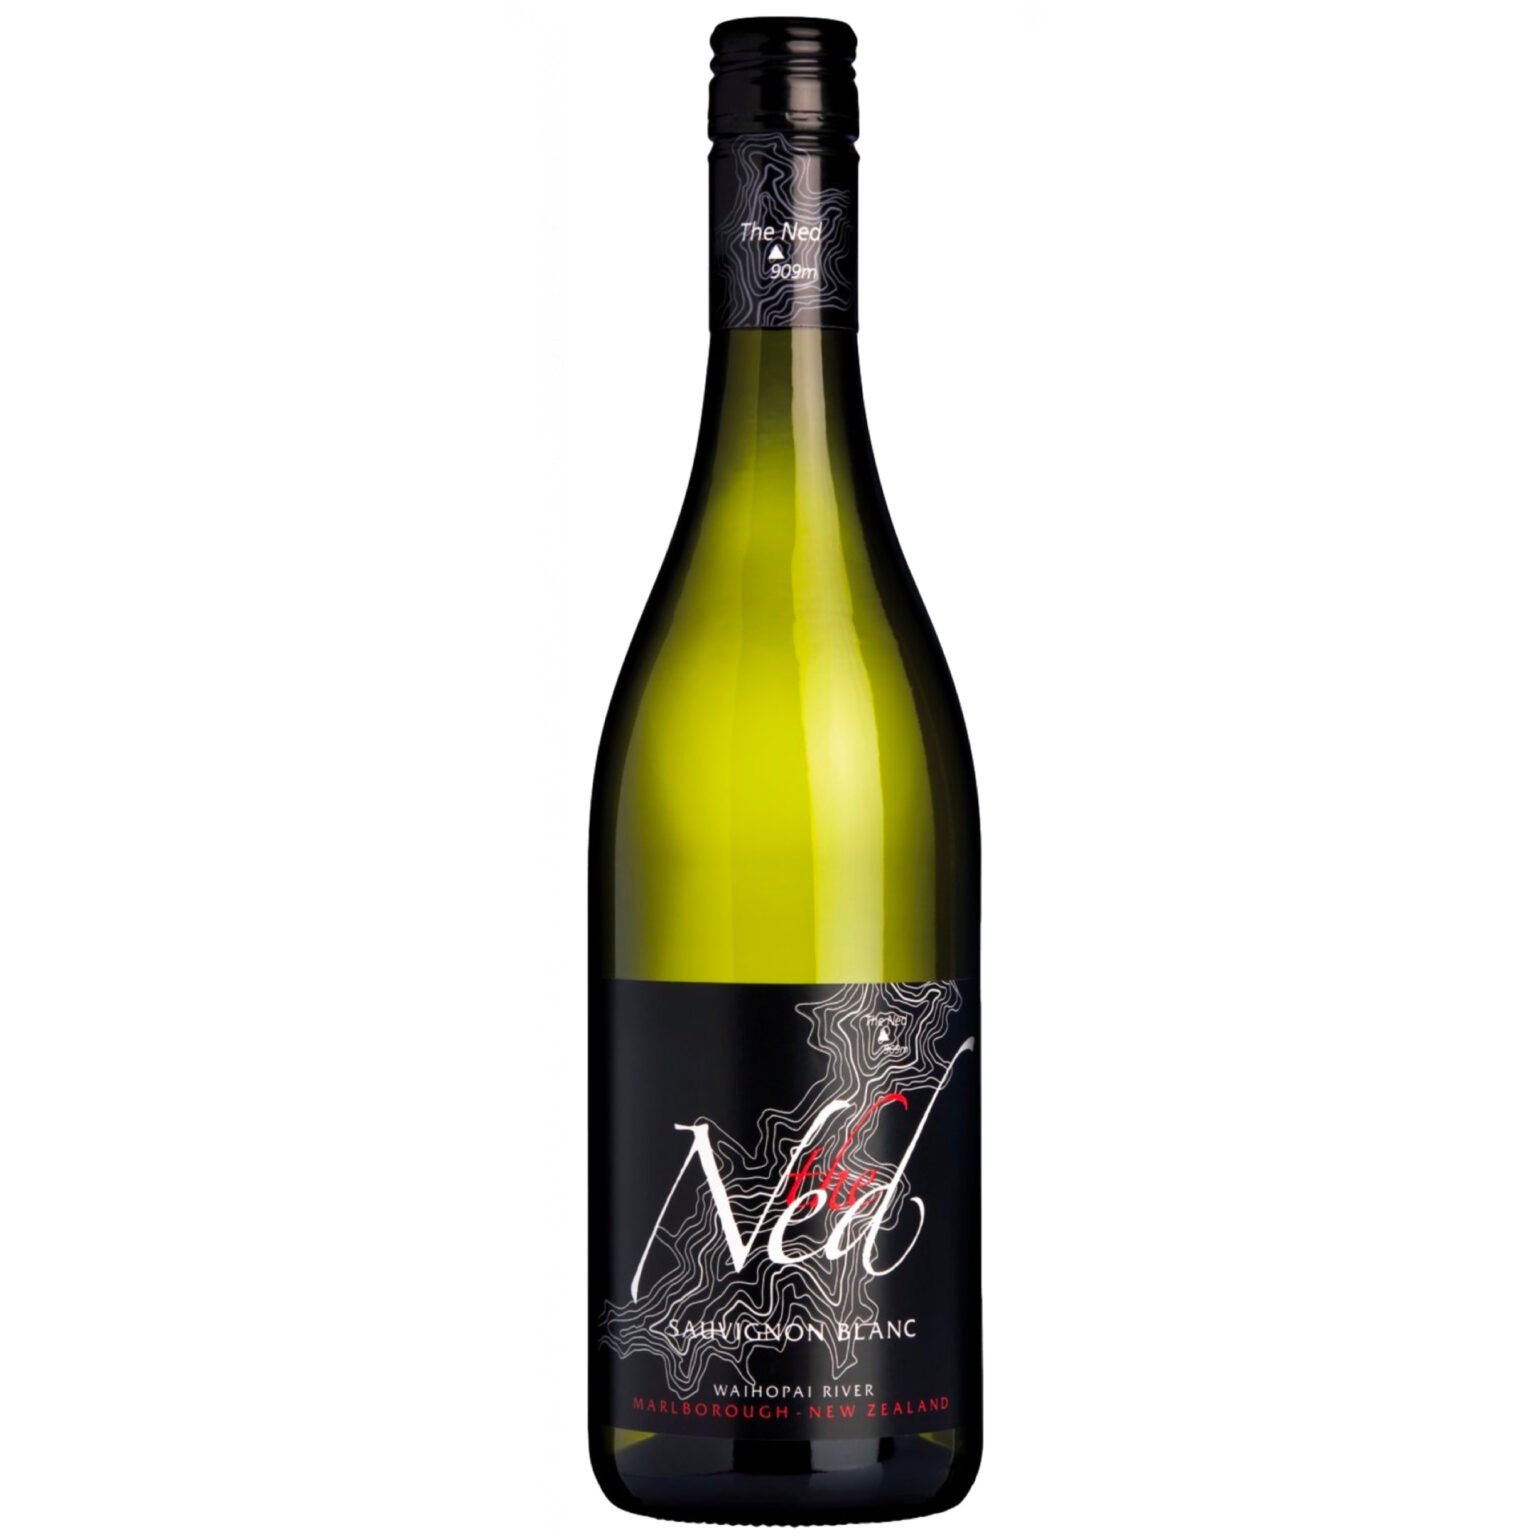 The Ned Sauvignon Blanc The Spirit of Wine